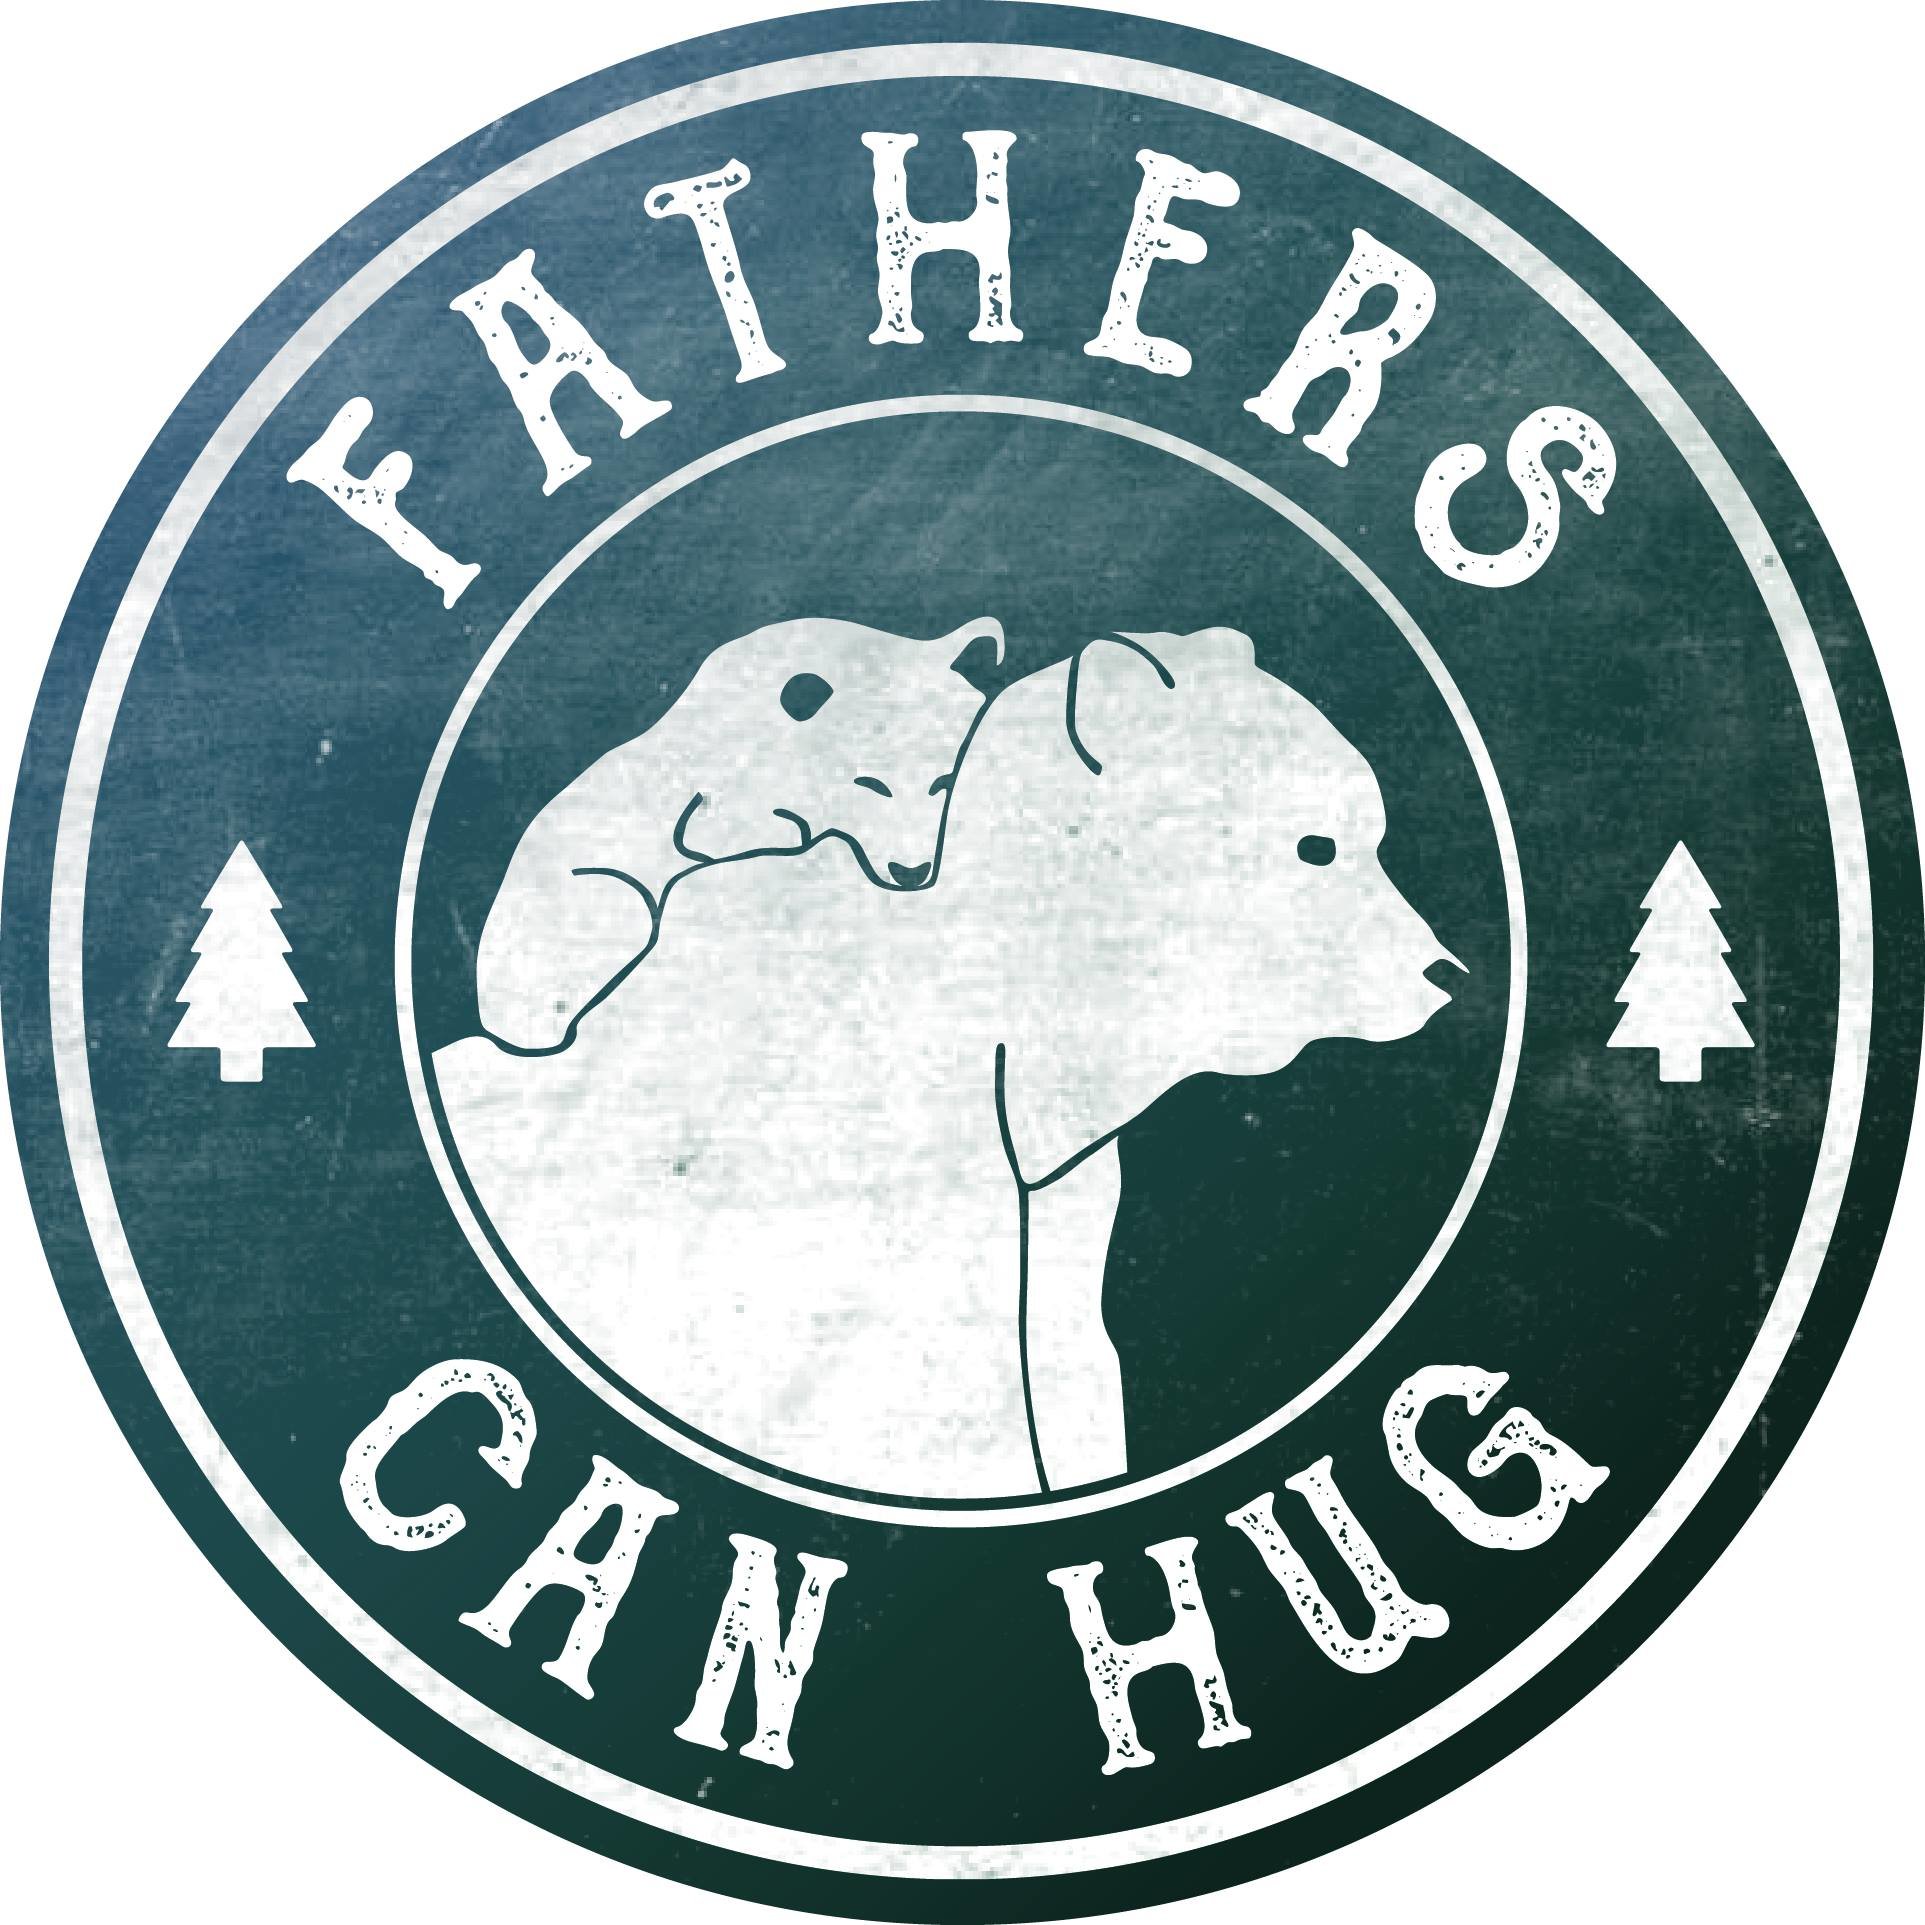 Fathers can hug